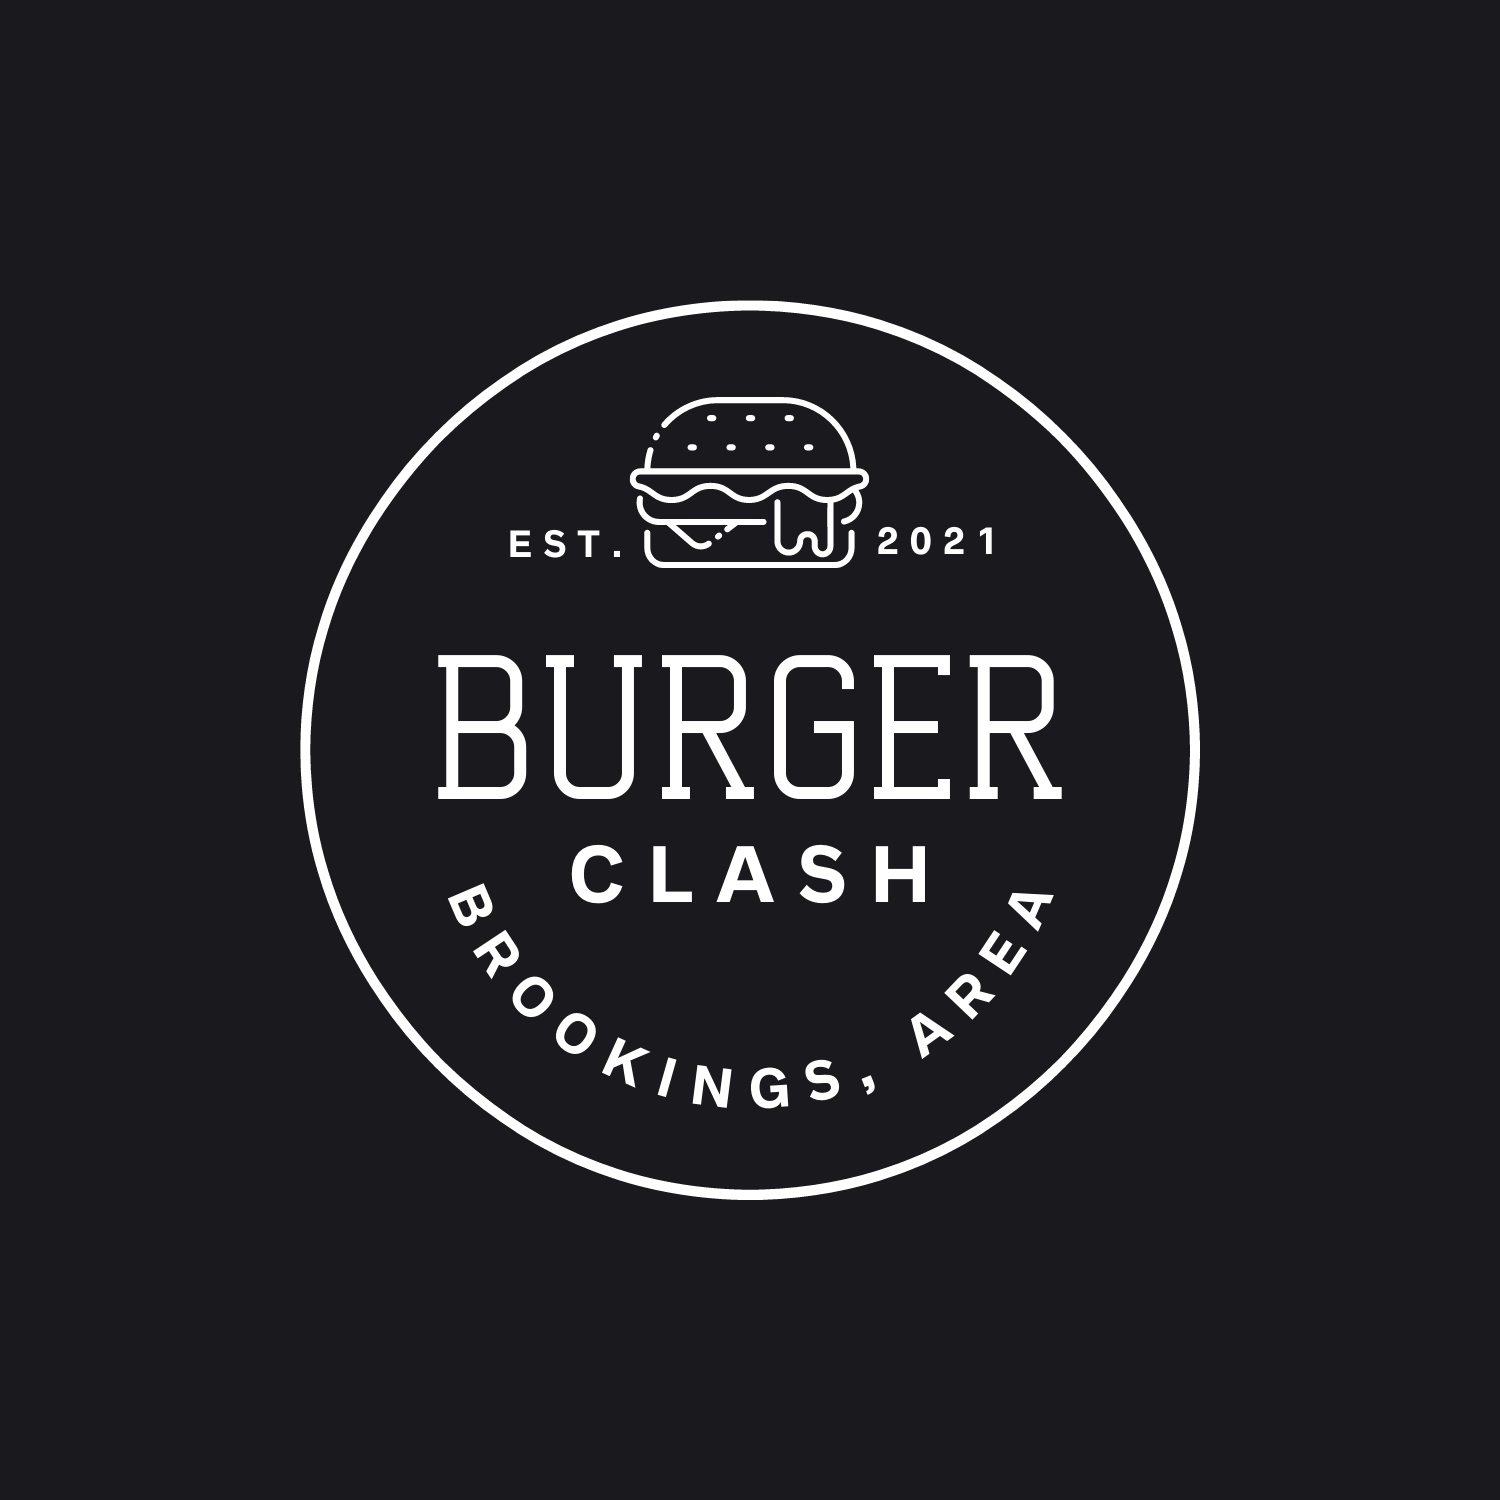 Brookings Area Burger Clash Last Day!